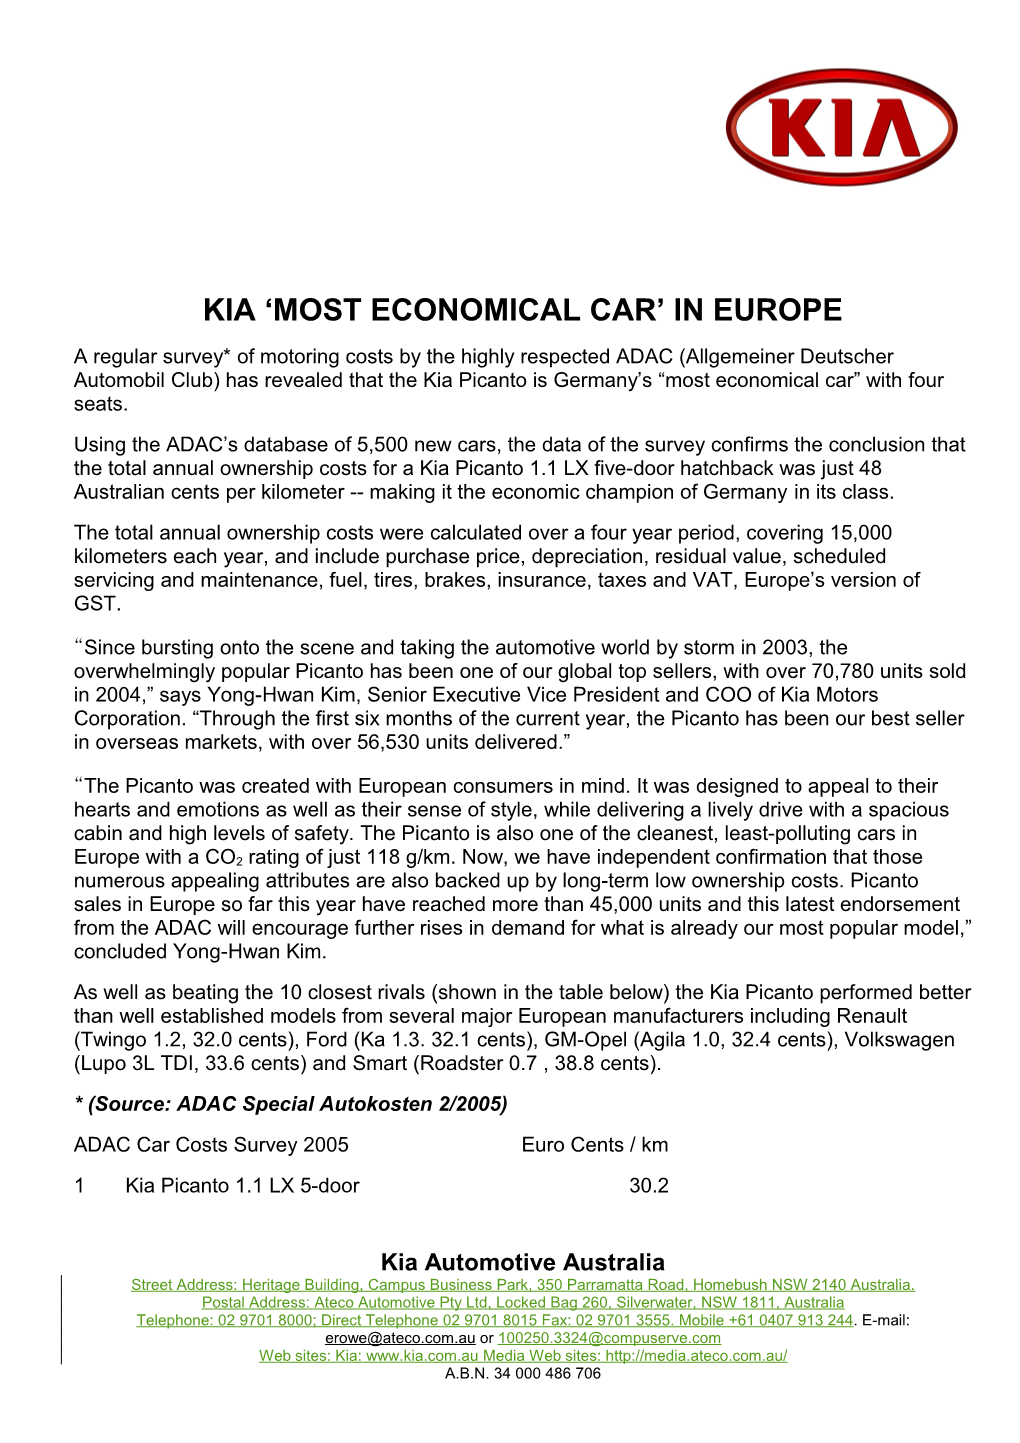 Kia Most Economical Car in Europe